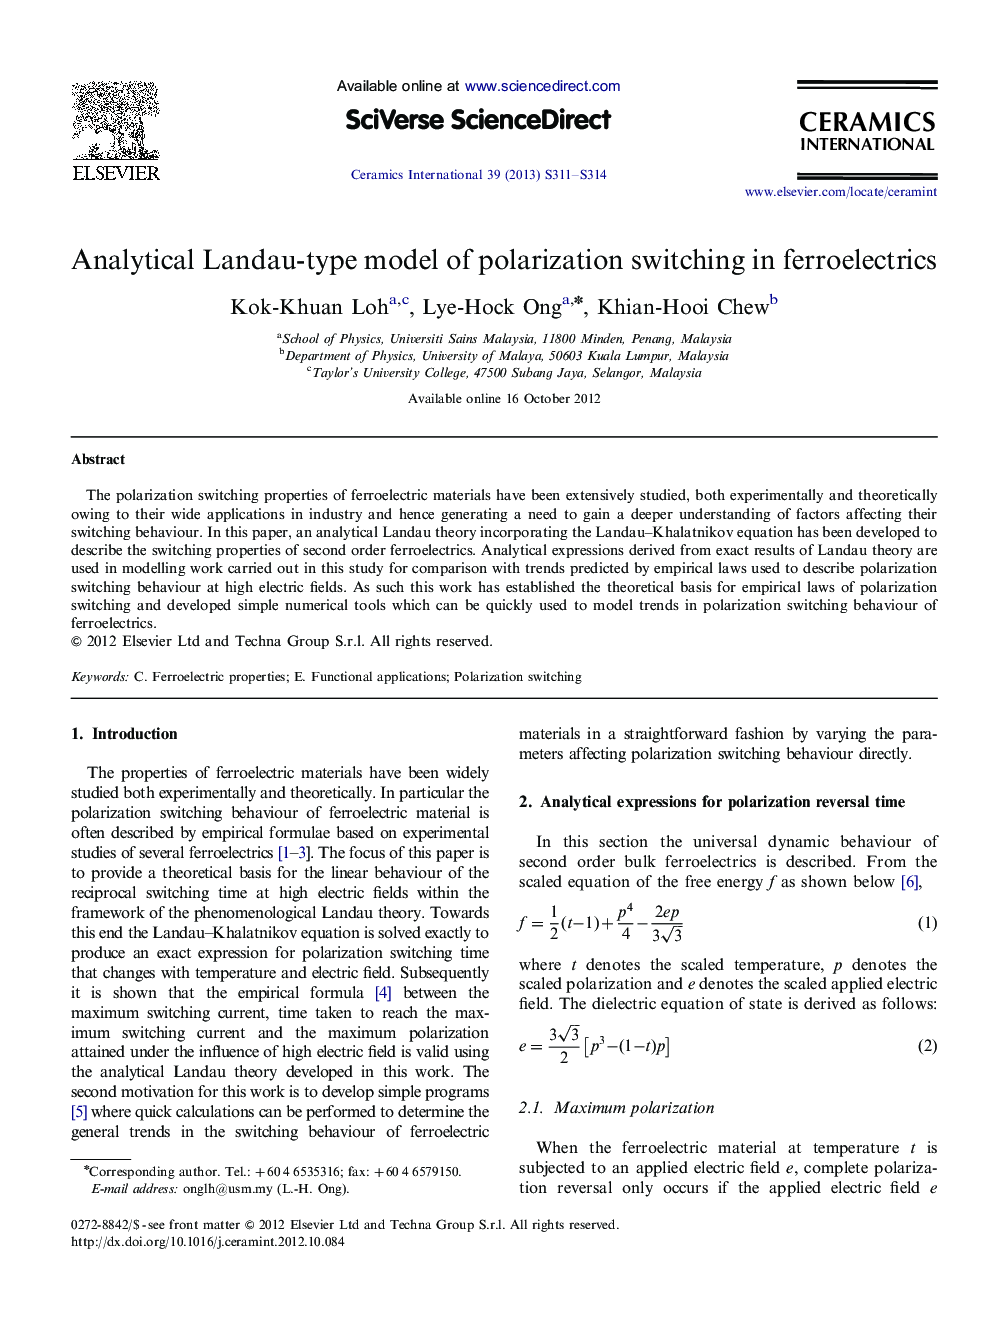 Analytical Landau-type model of polarization switching in ferroelectrics